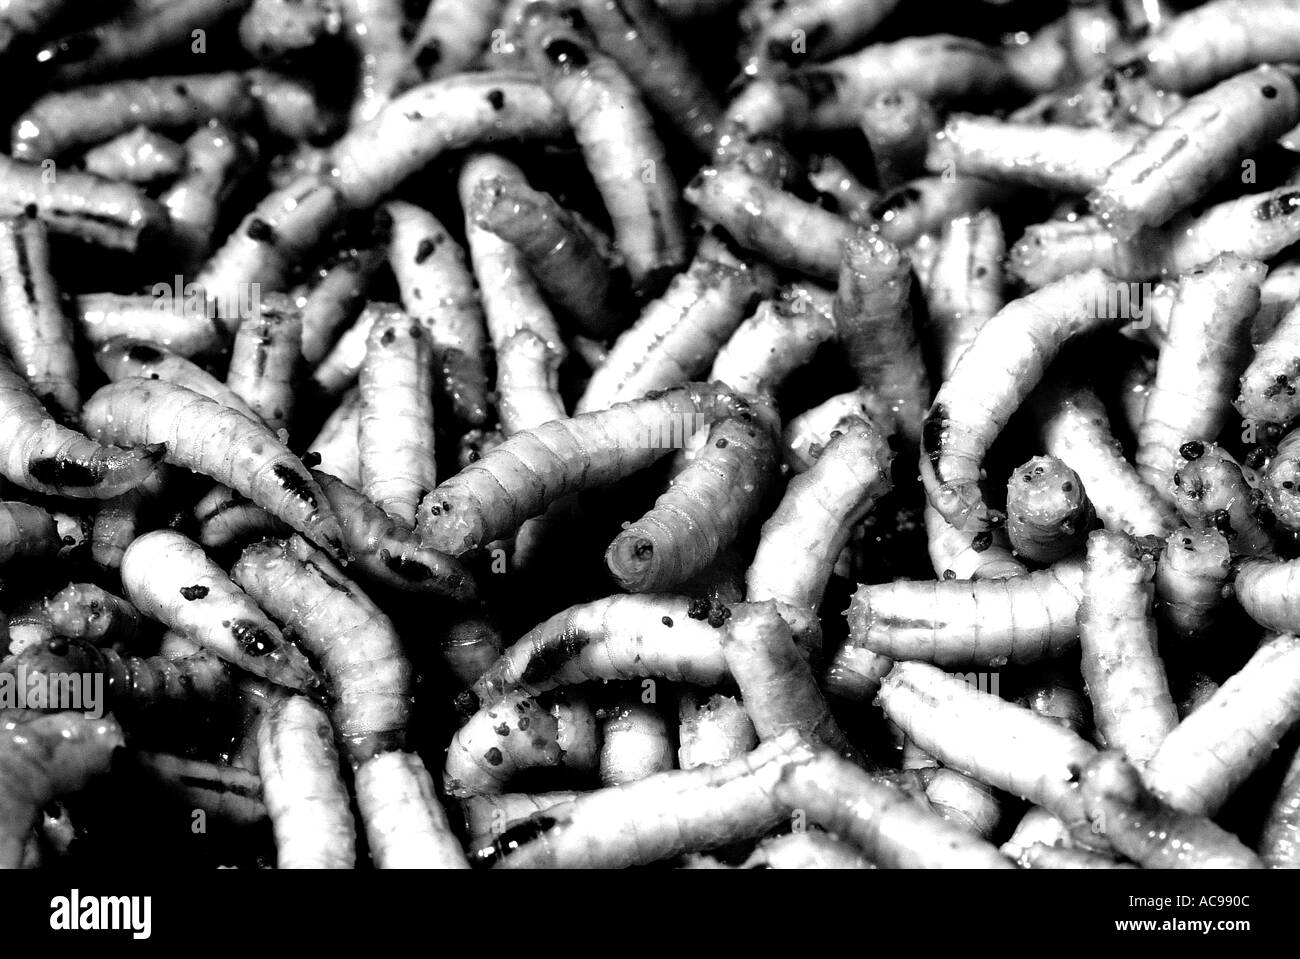 Maggots black and white Stock Photo